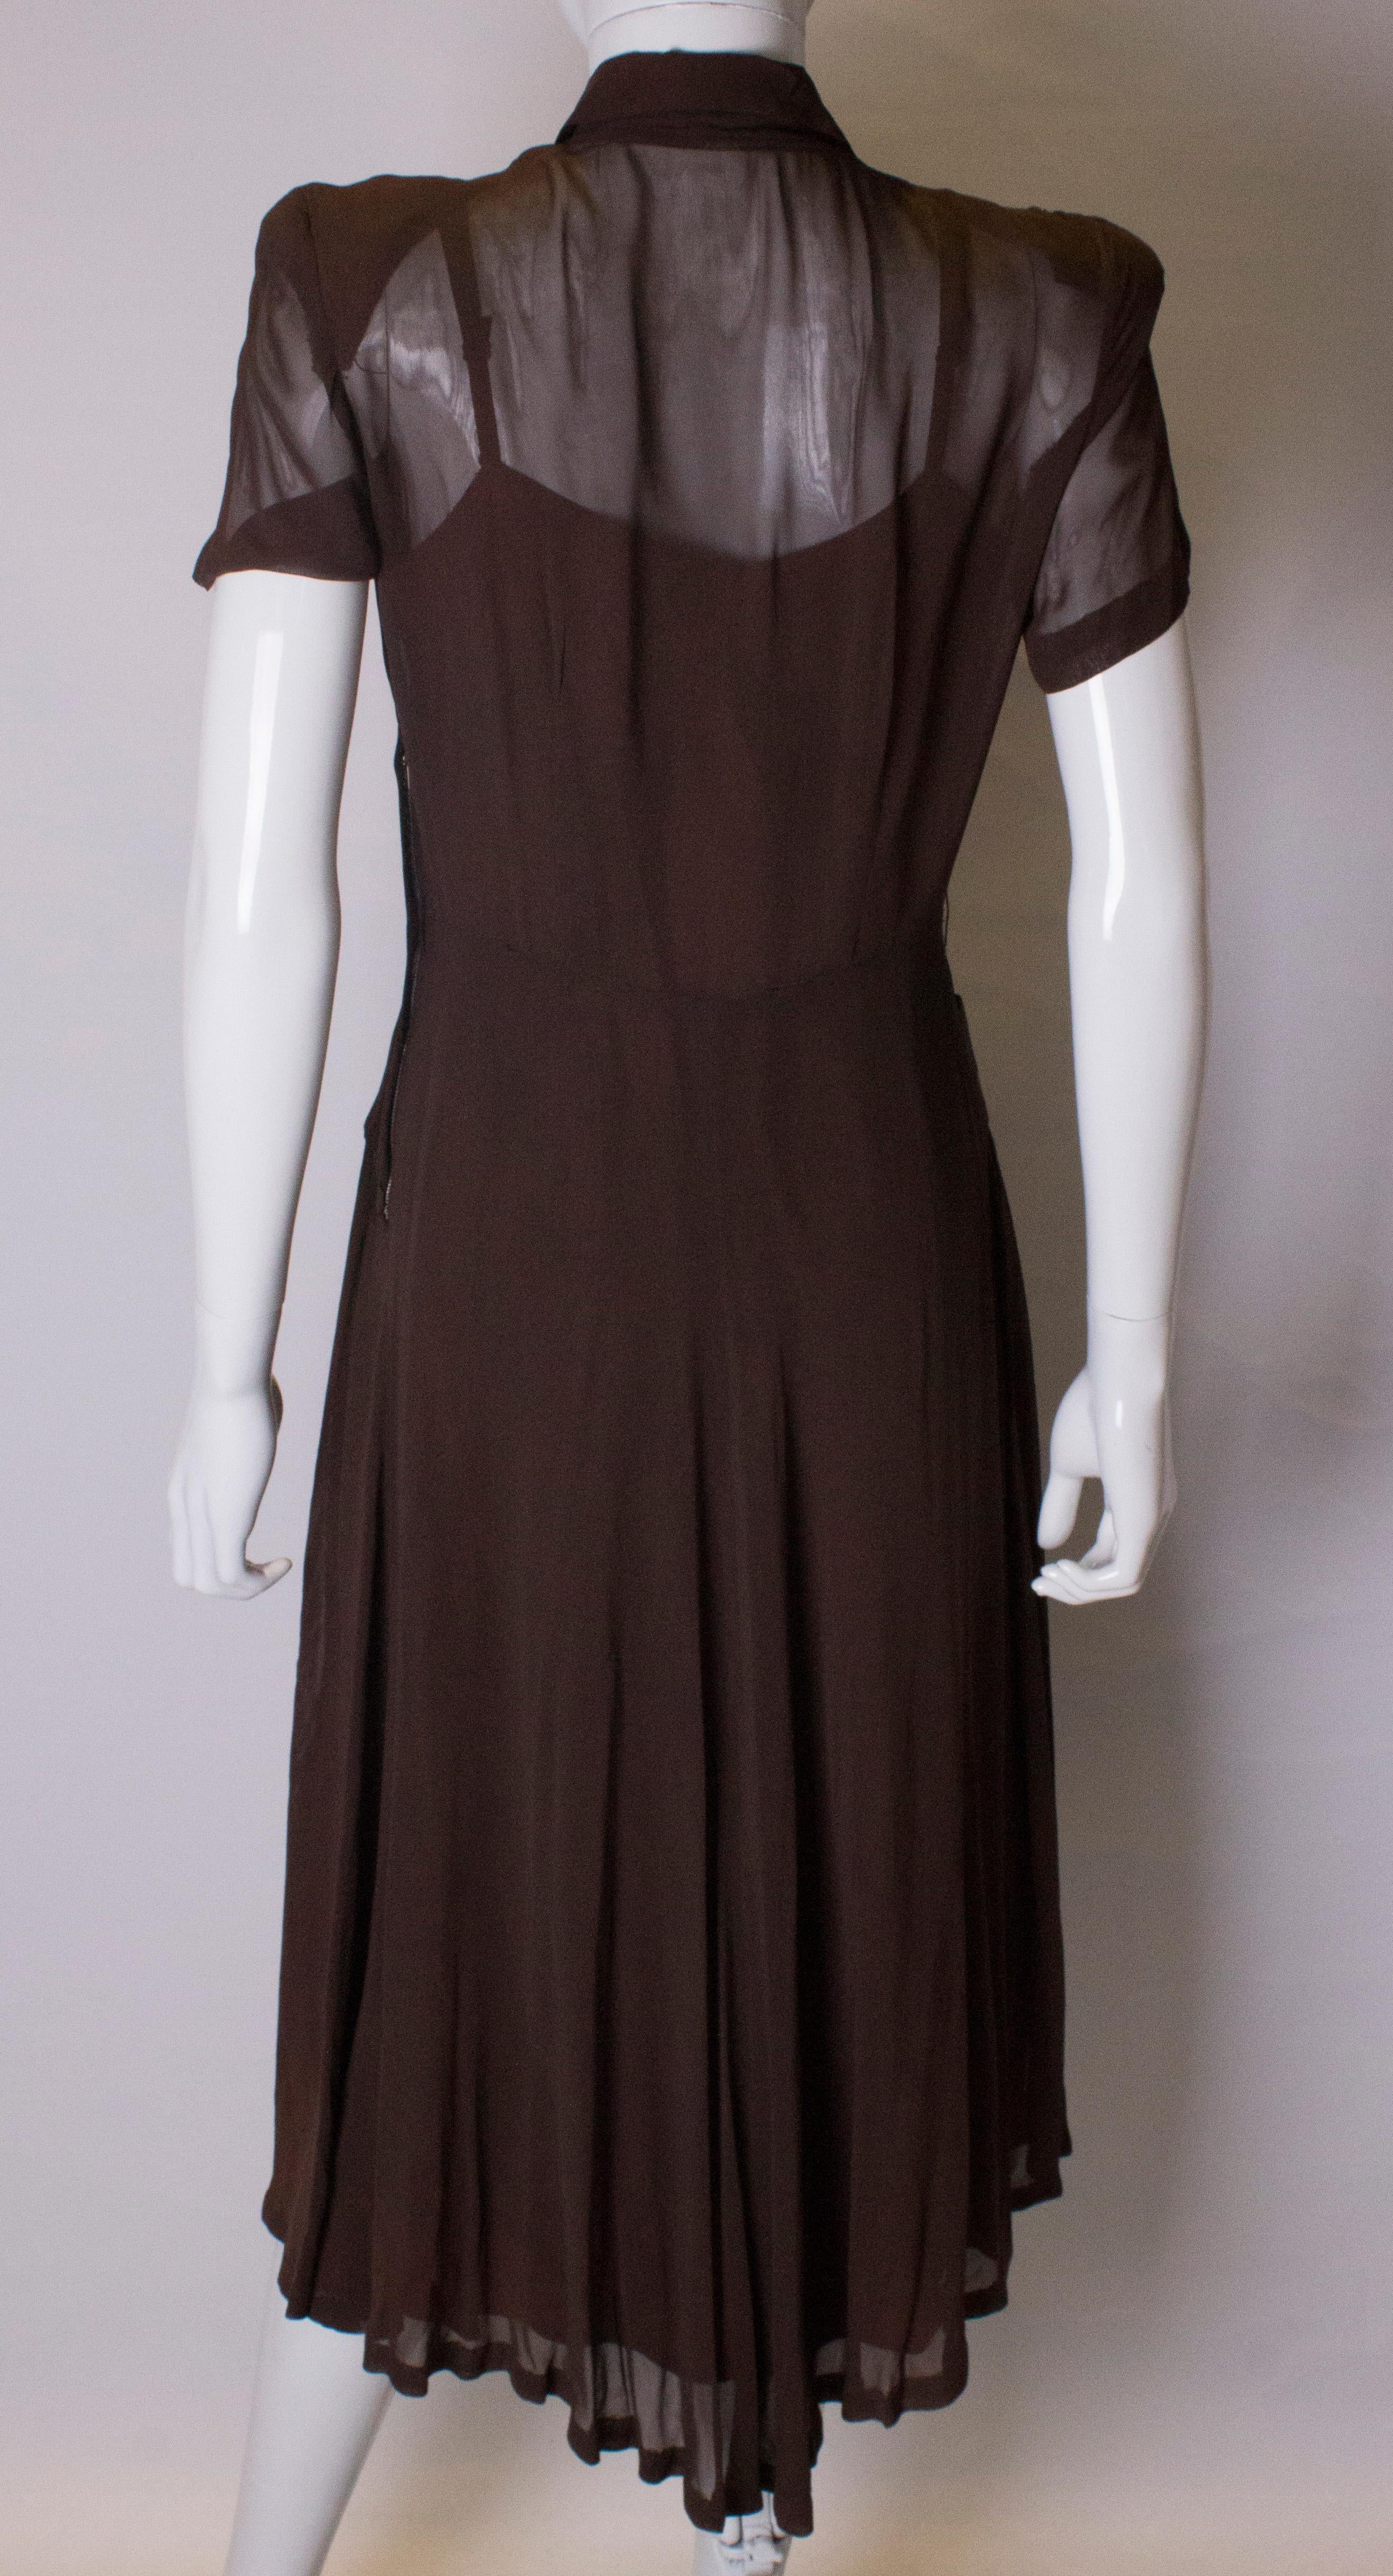 Women's Vintage 1940s Dress For Sale